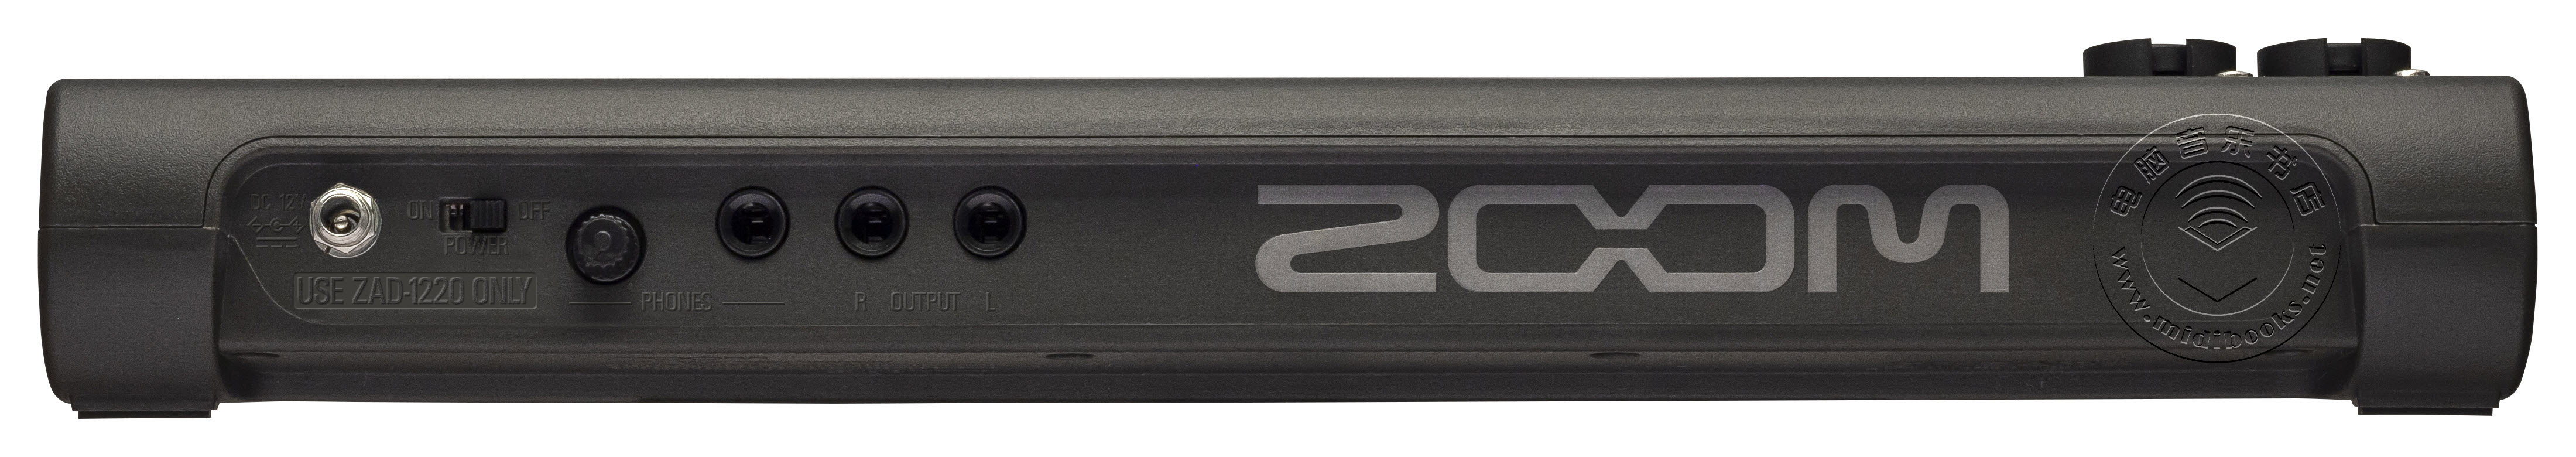 Zoom即将推出带有触摸屏的16轨便携式多轨录音机R20